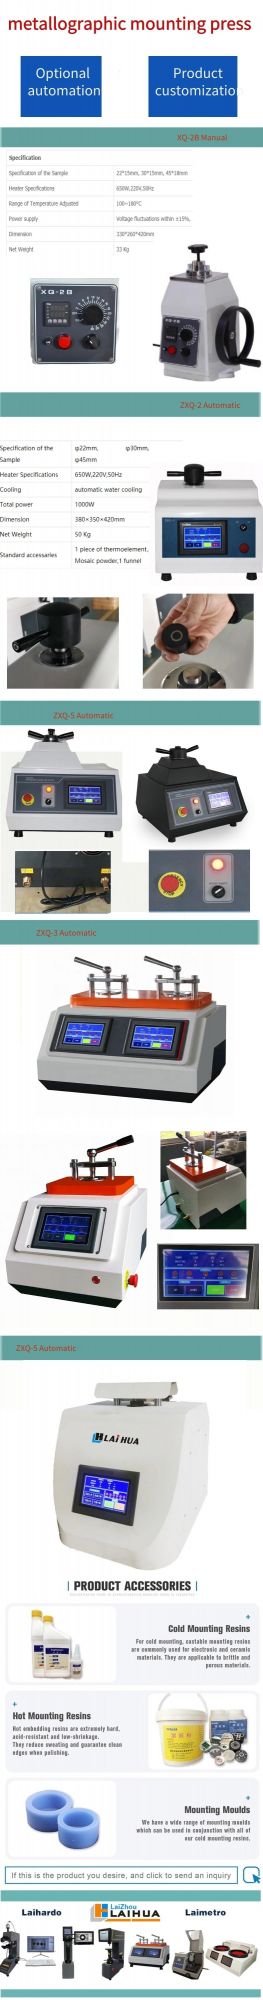 Zxq-2 Automatic Metallographic Specimen Used Heat Press Machine /Ce: Certificates: Automatic Single Head Mounting Press